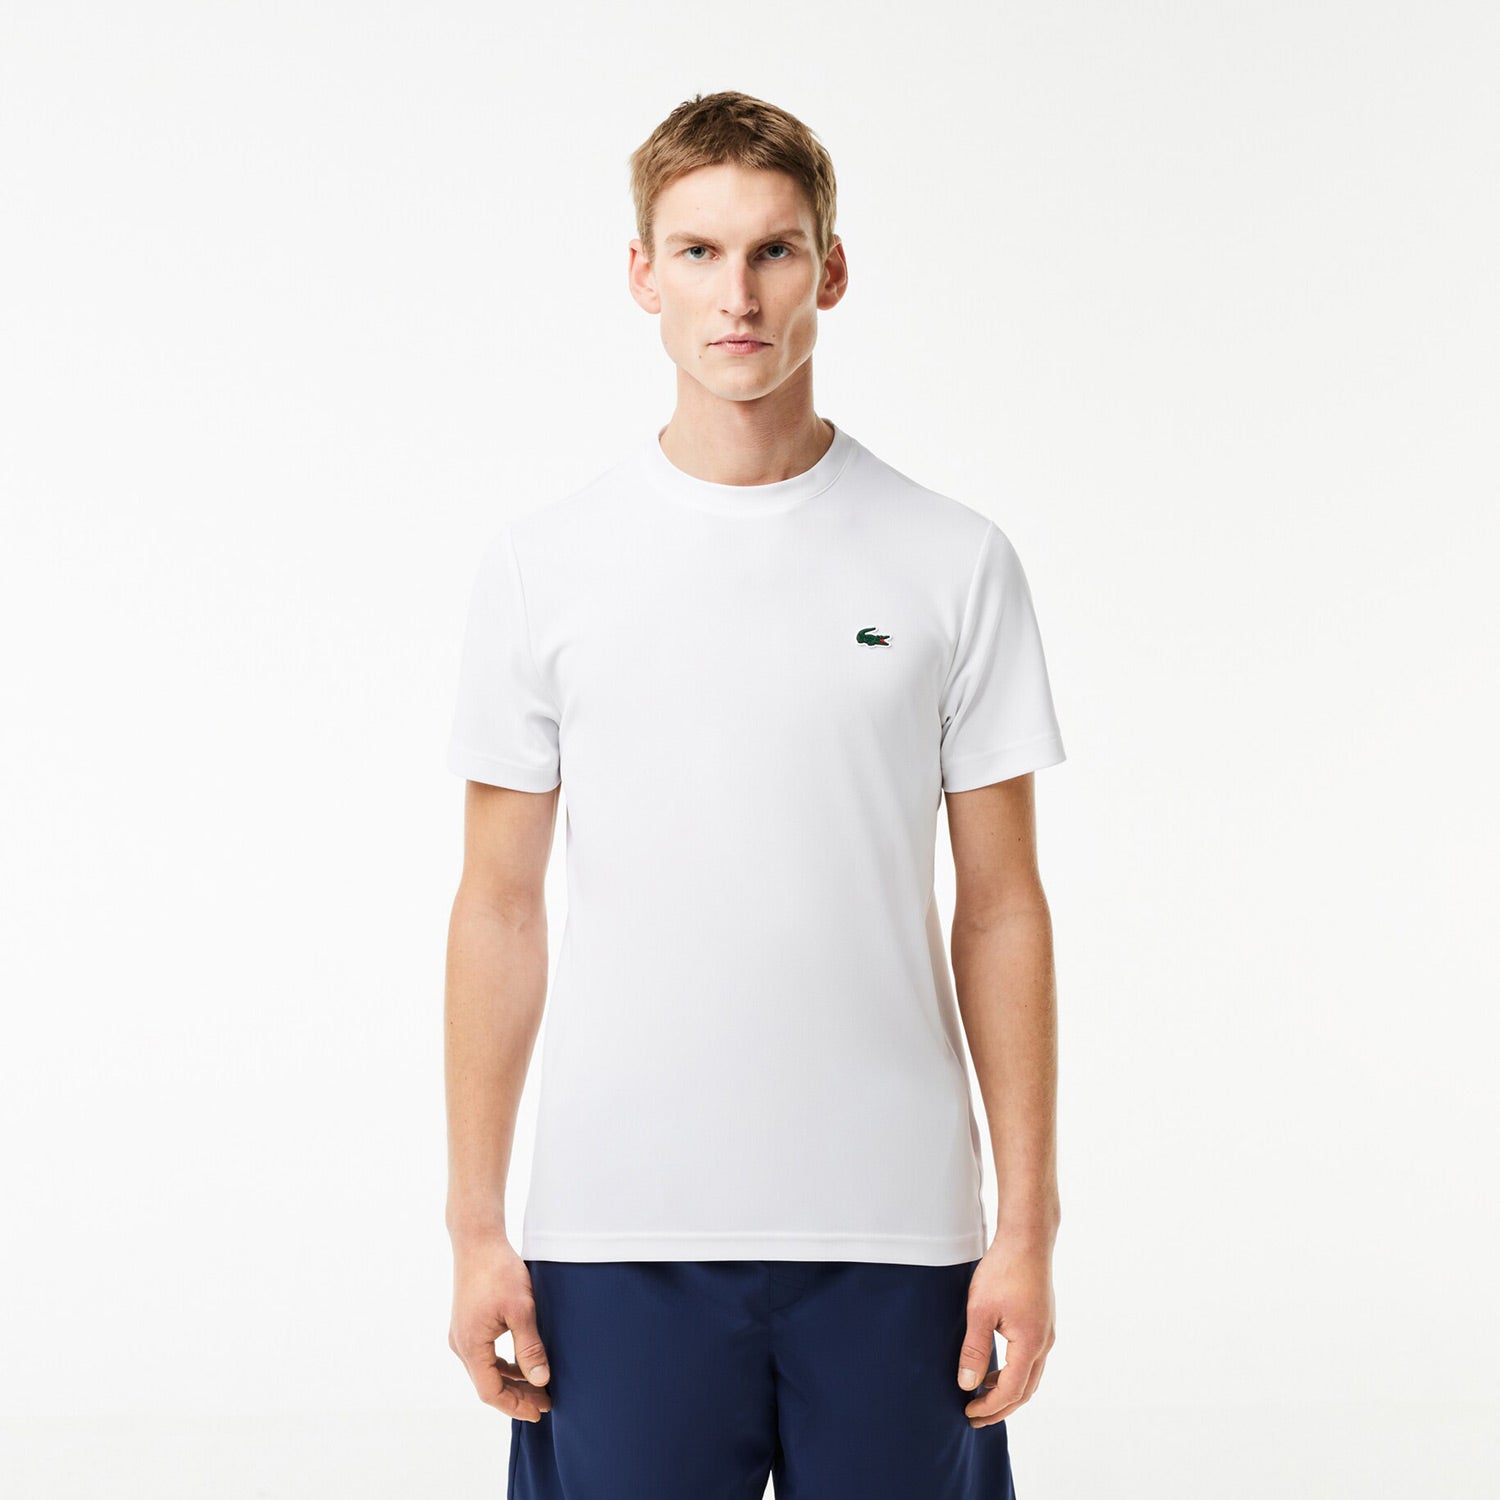 Lacoste Men's Ultra Dry Pique Tennis Shirt - White (1)